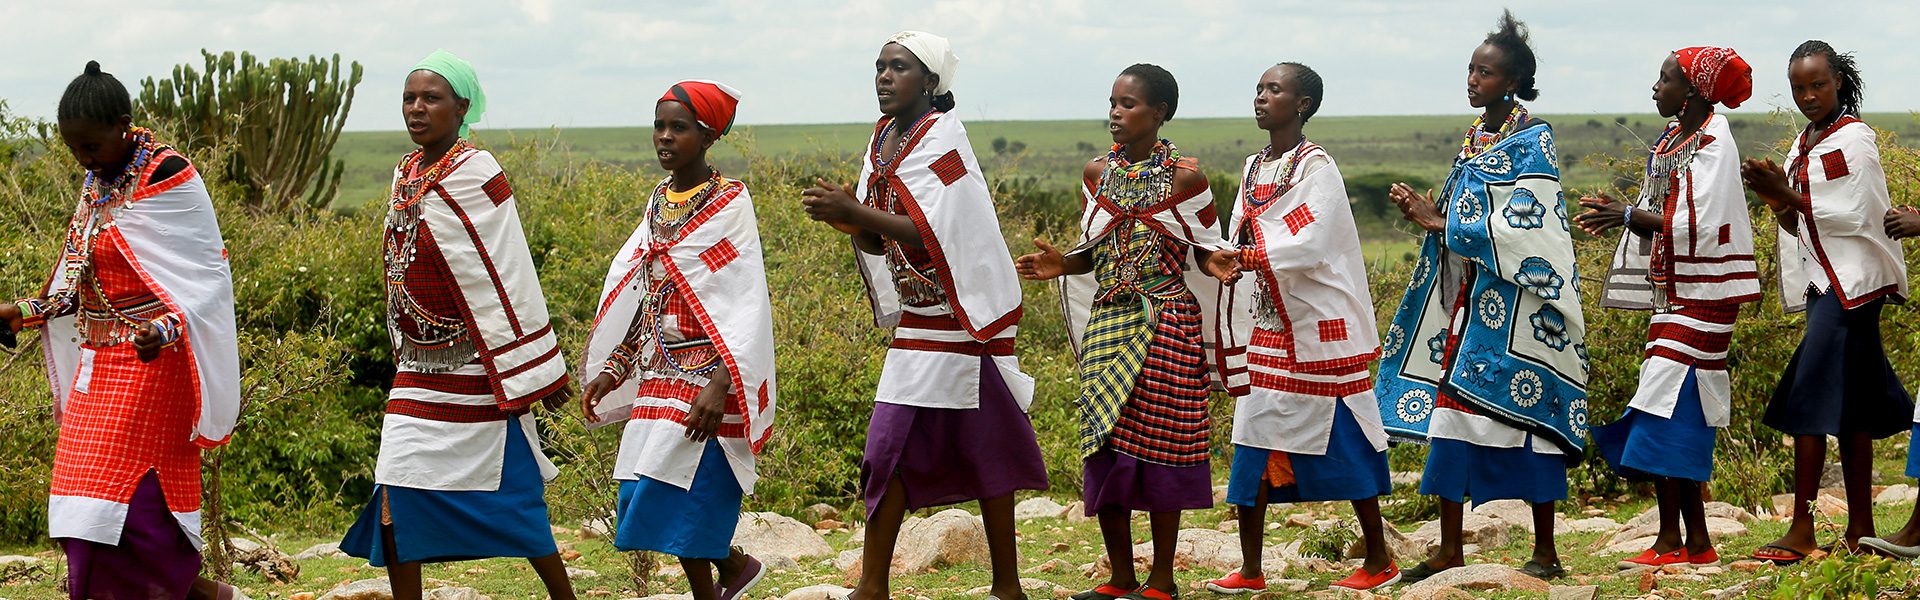 kenya-masai-mara-bonga-girls-on-line